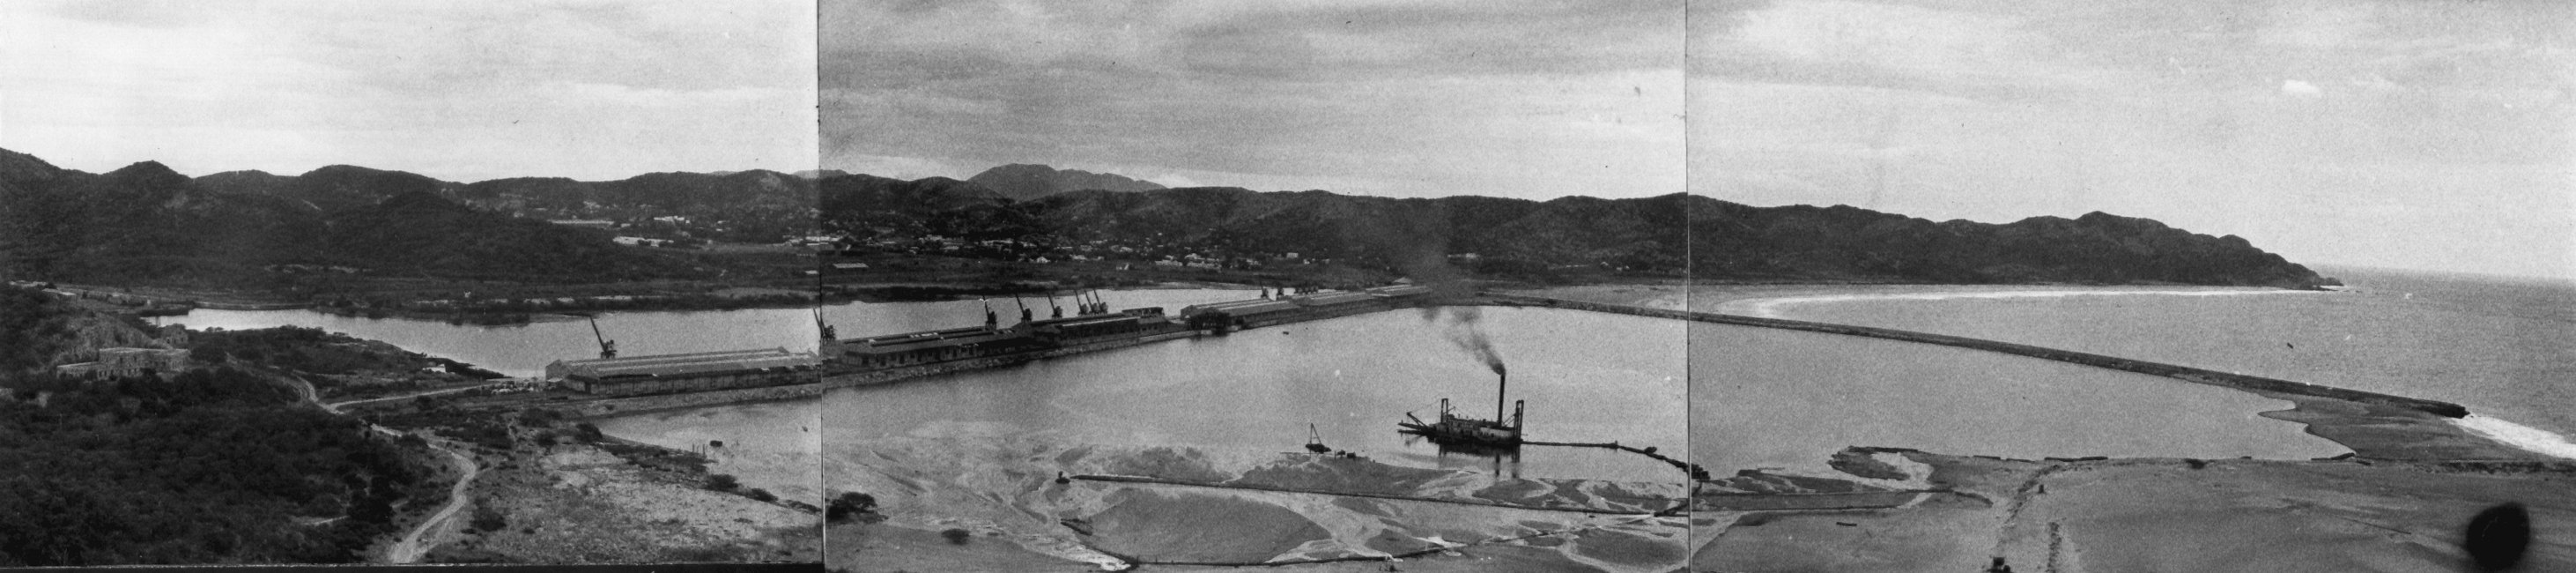 1937_09_01-3-073-PanoramaOfSalinaCruz.jpg